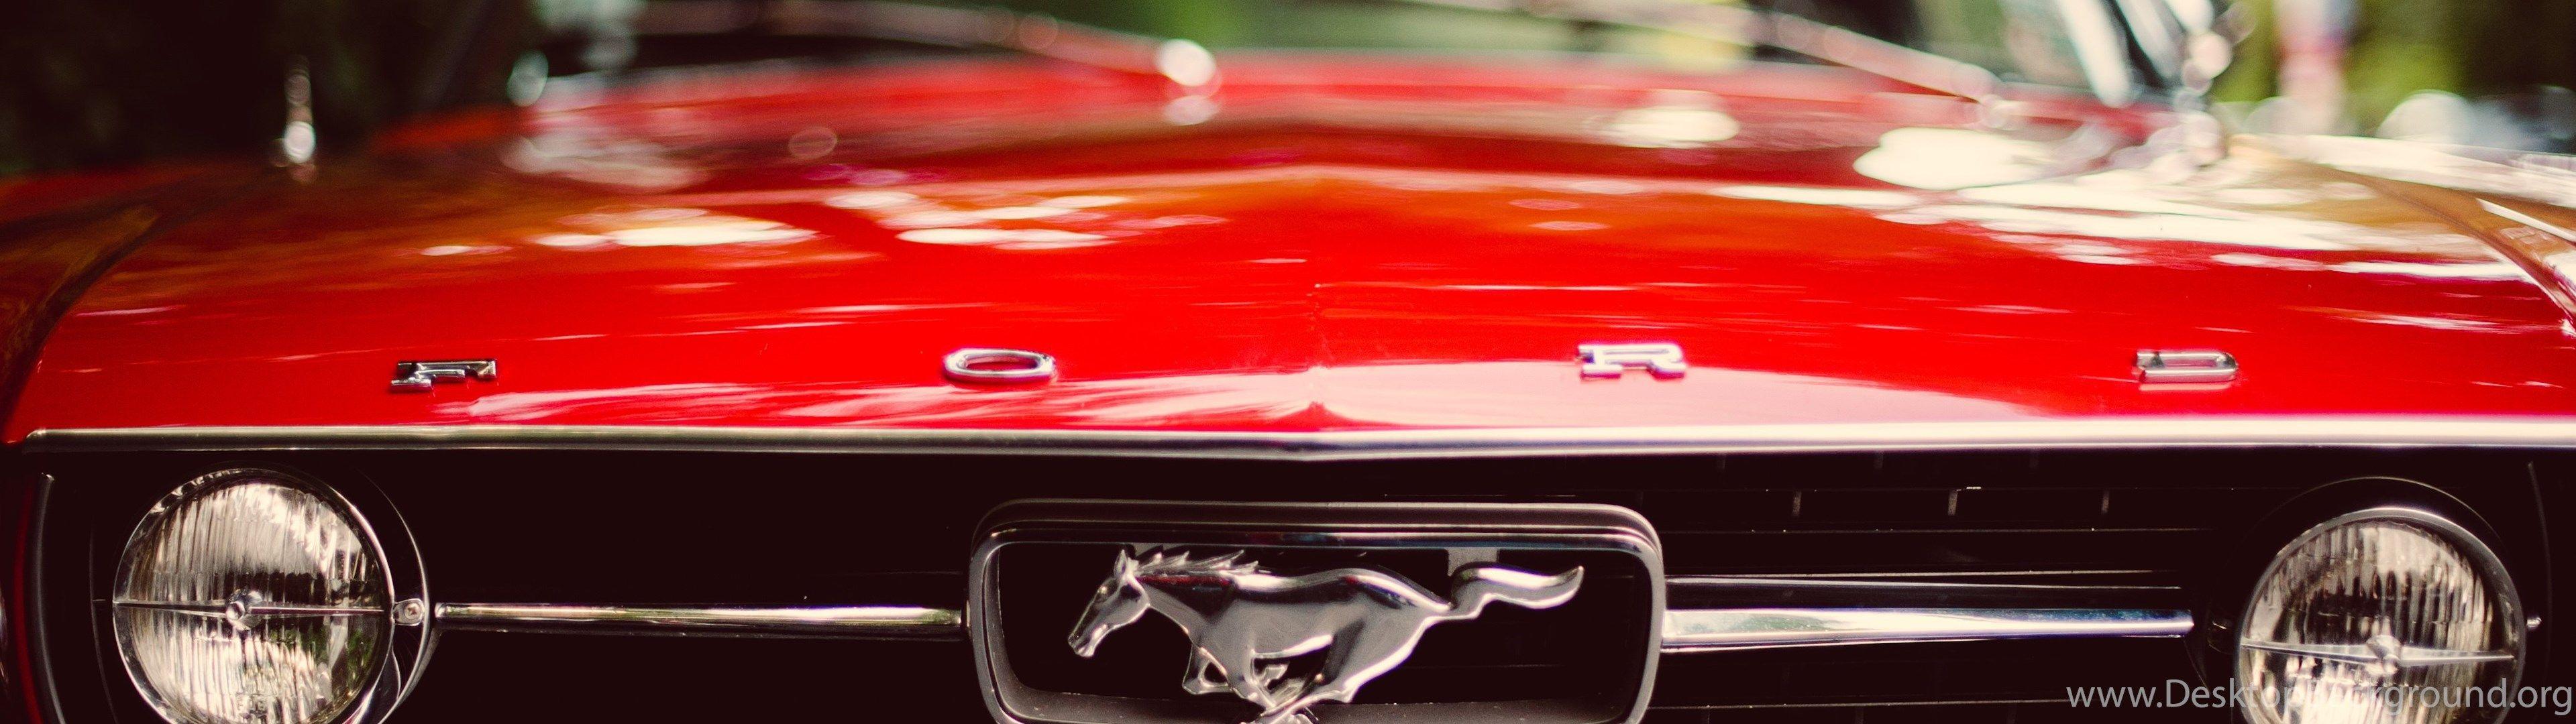 Mustang Dual Monitor Wallpapers Top Free Mustang Dual Monitor Backgrounds Wallpaperaccess